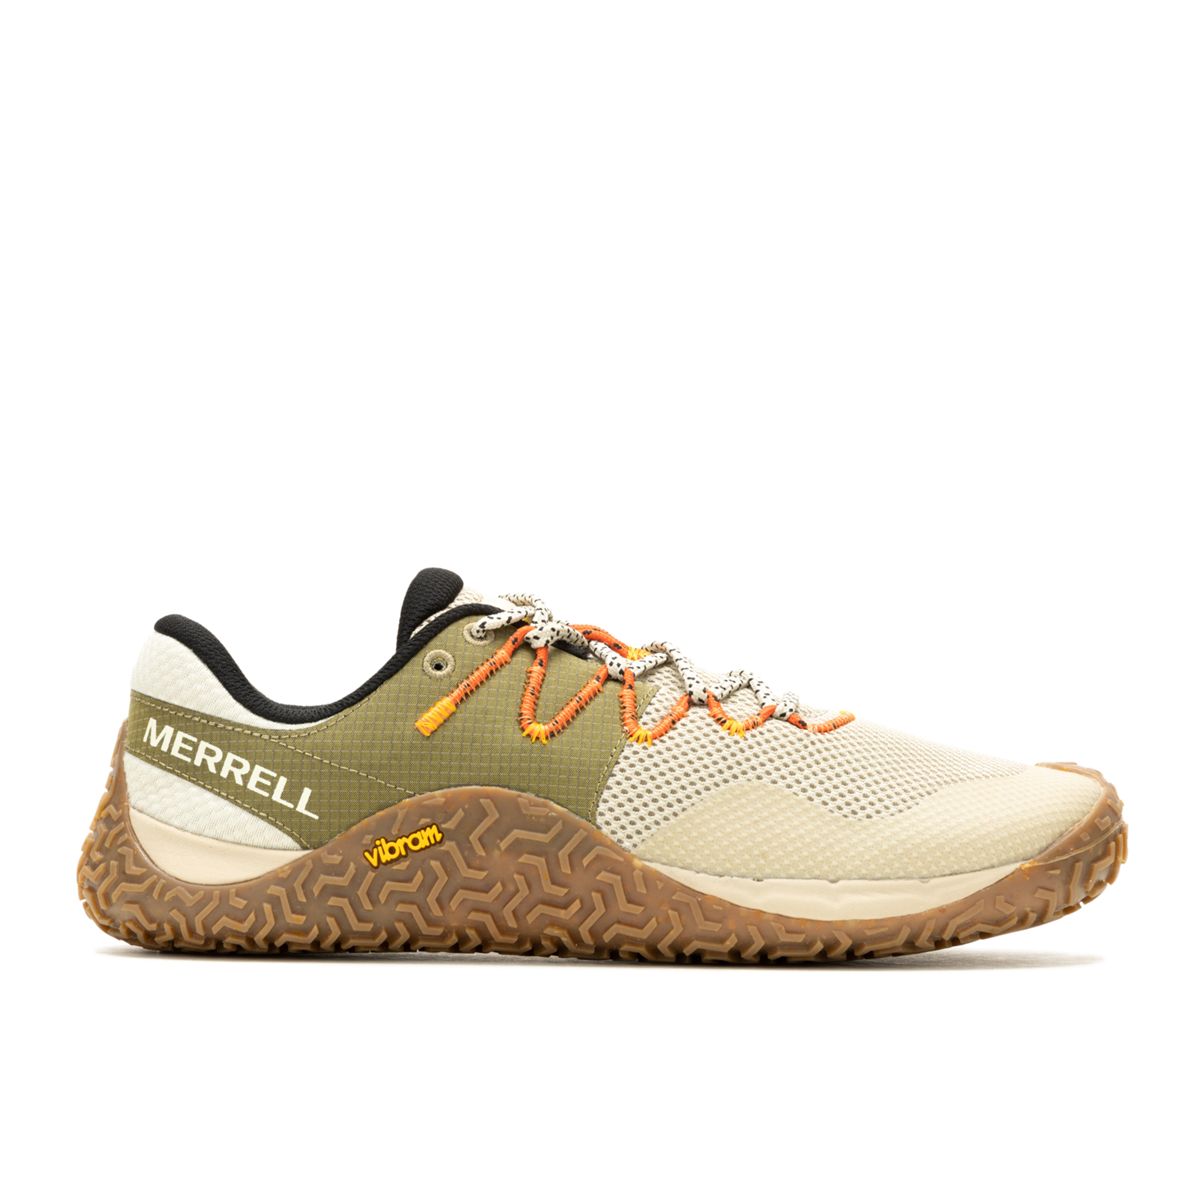 Merrell - Women's Trail Glove 7 GTX - Barefoot shoes - Atoll / High Rise |  40 (EU)